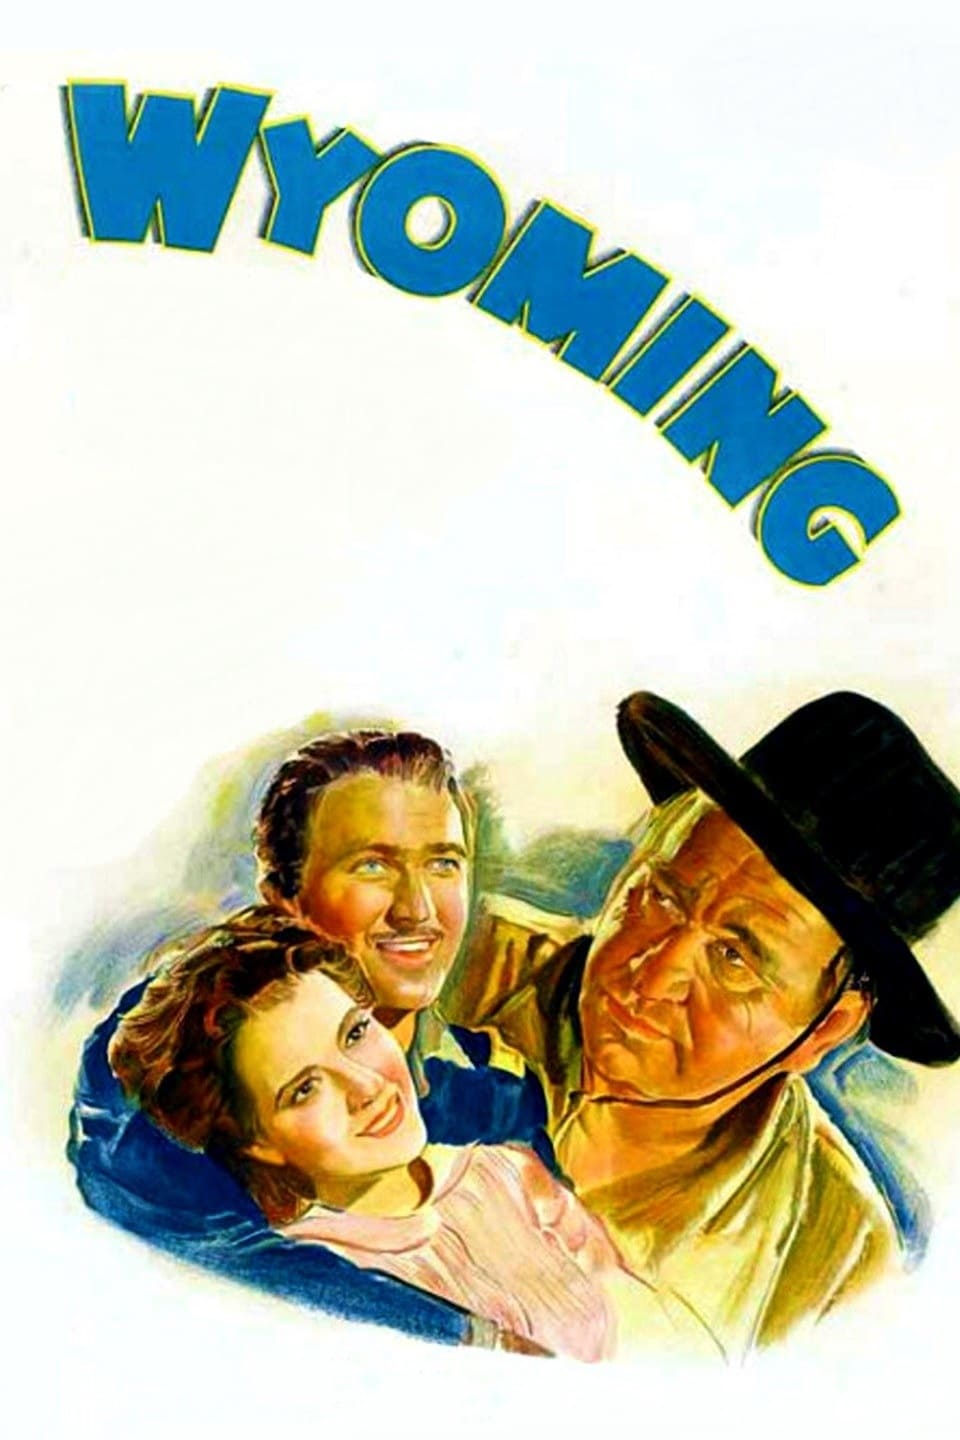 Wyoming (1940)